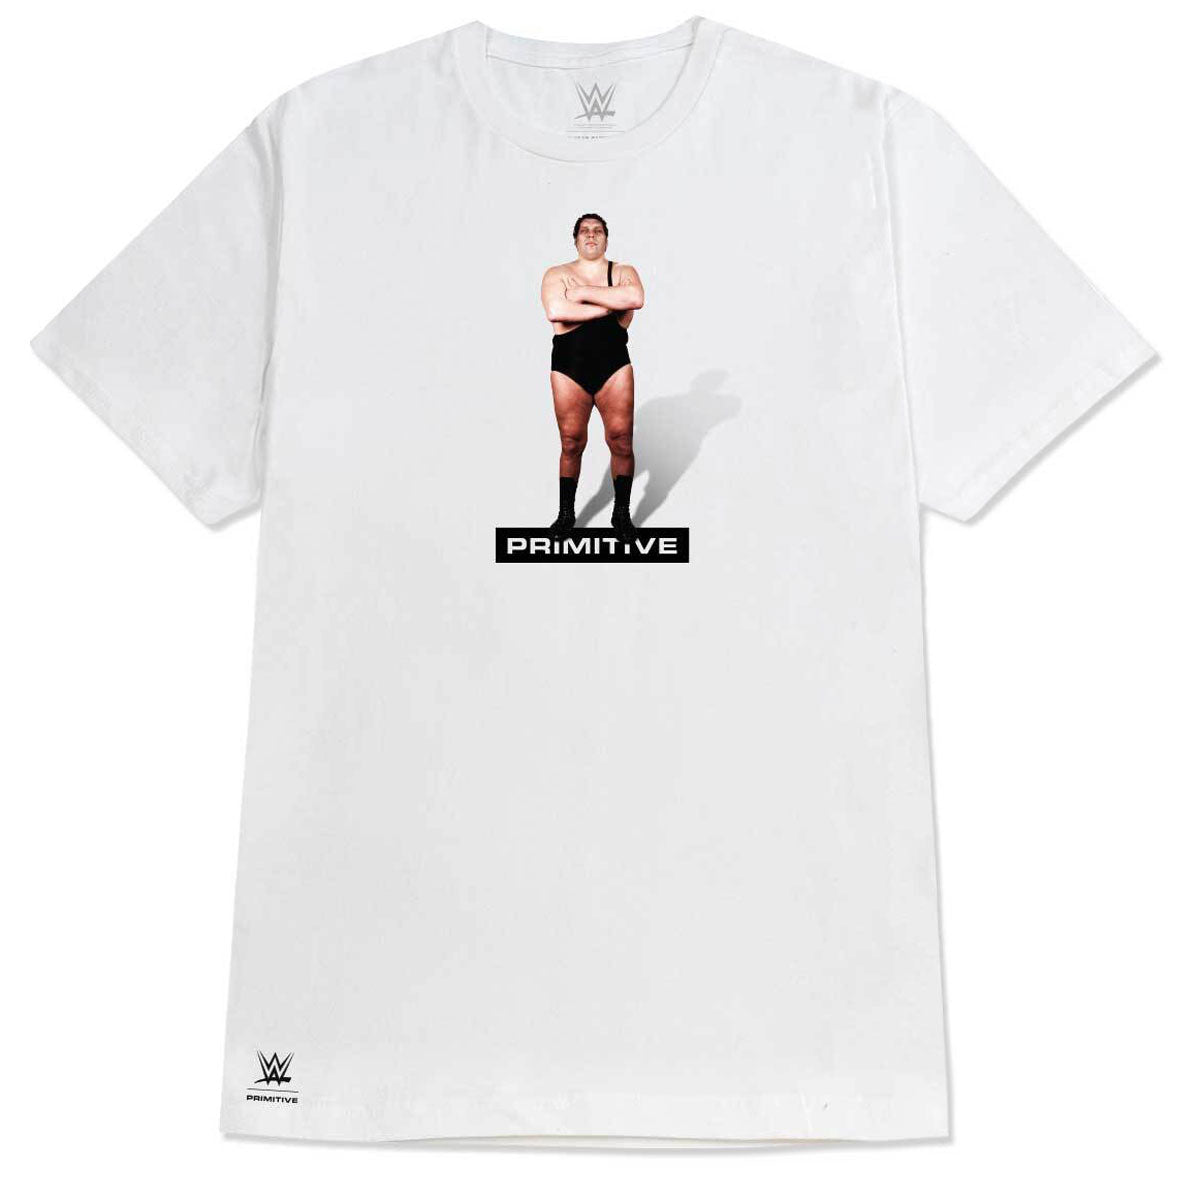 Primitive x WWE Giant T-Shirt - White image 1